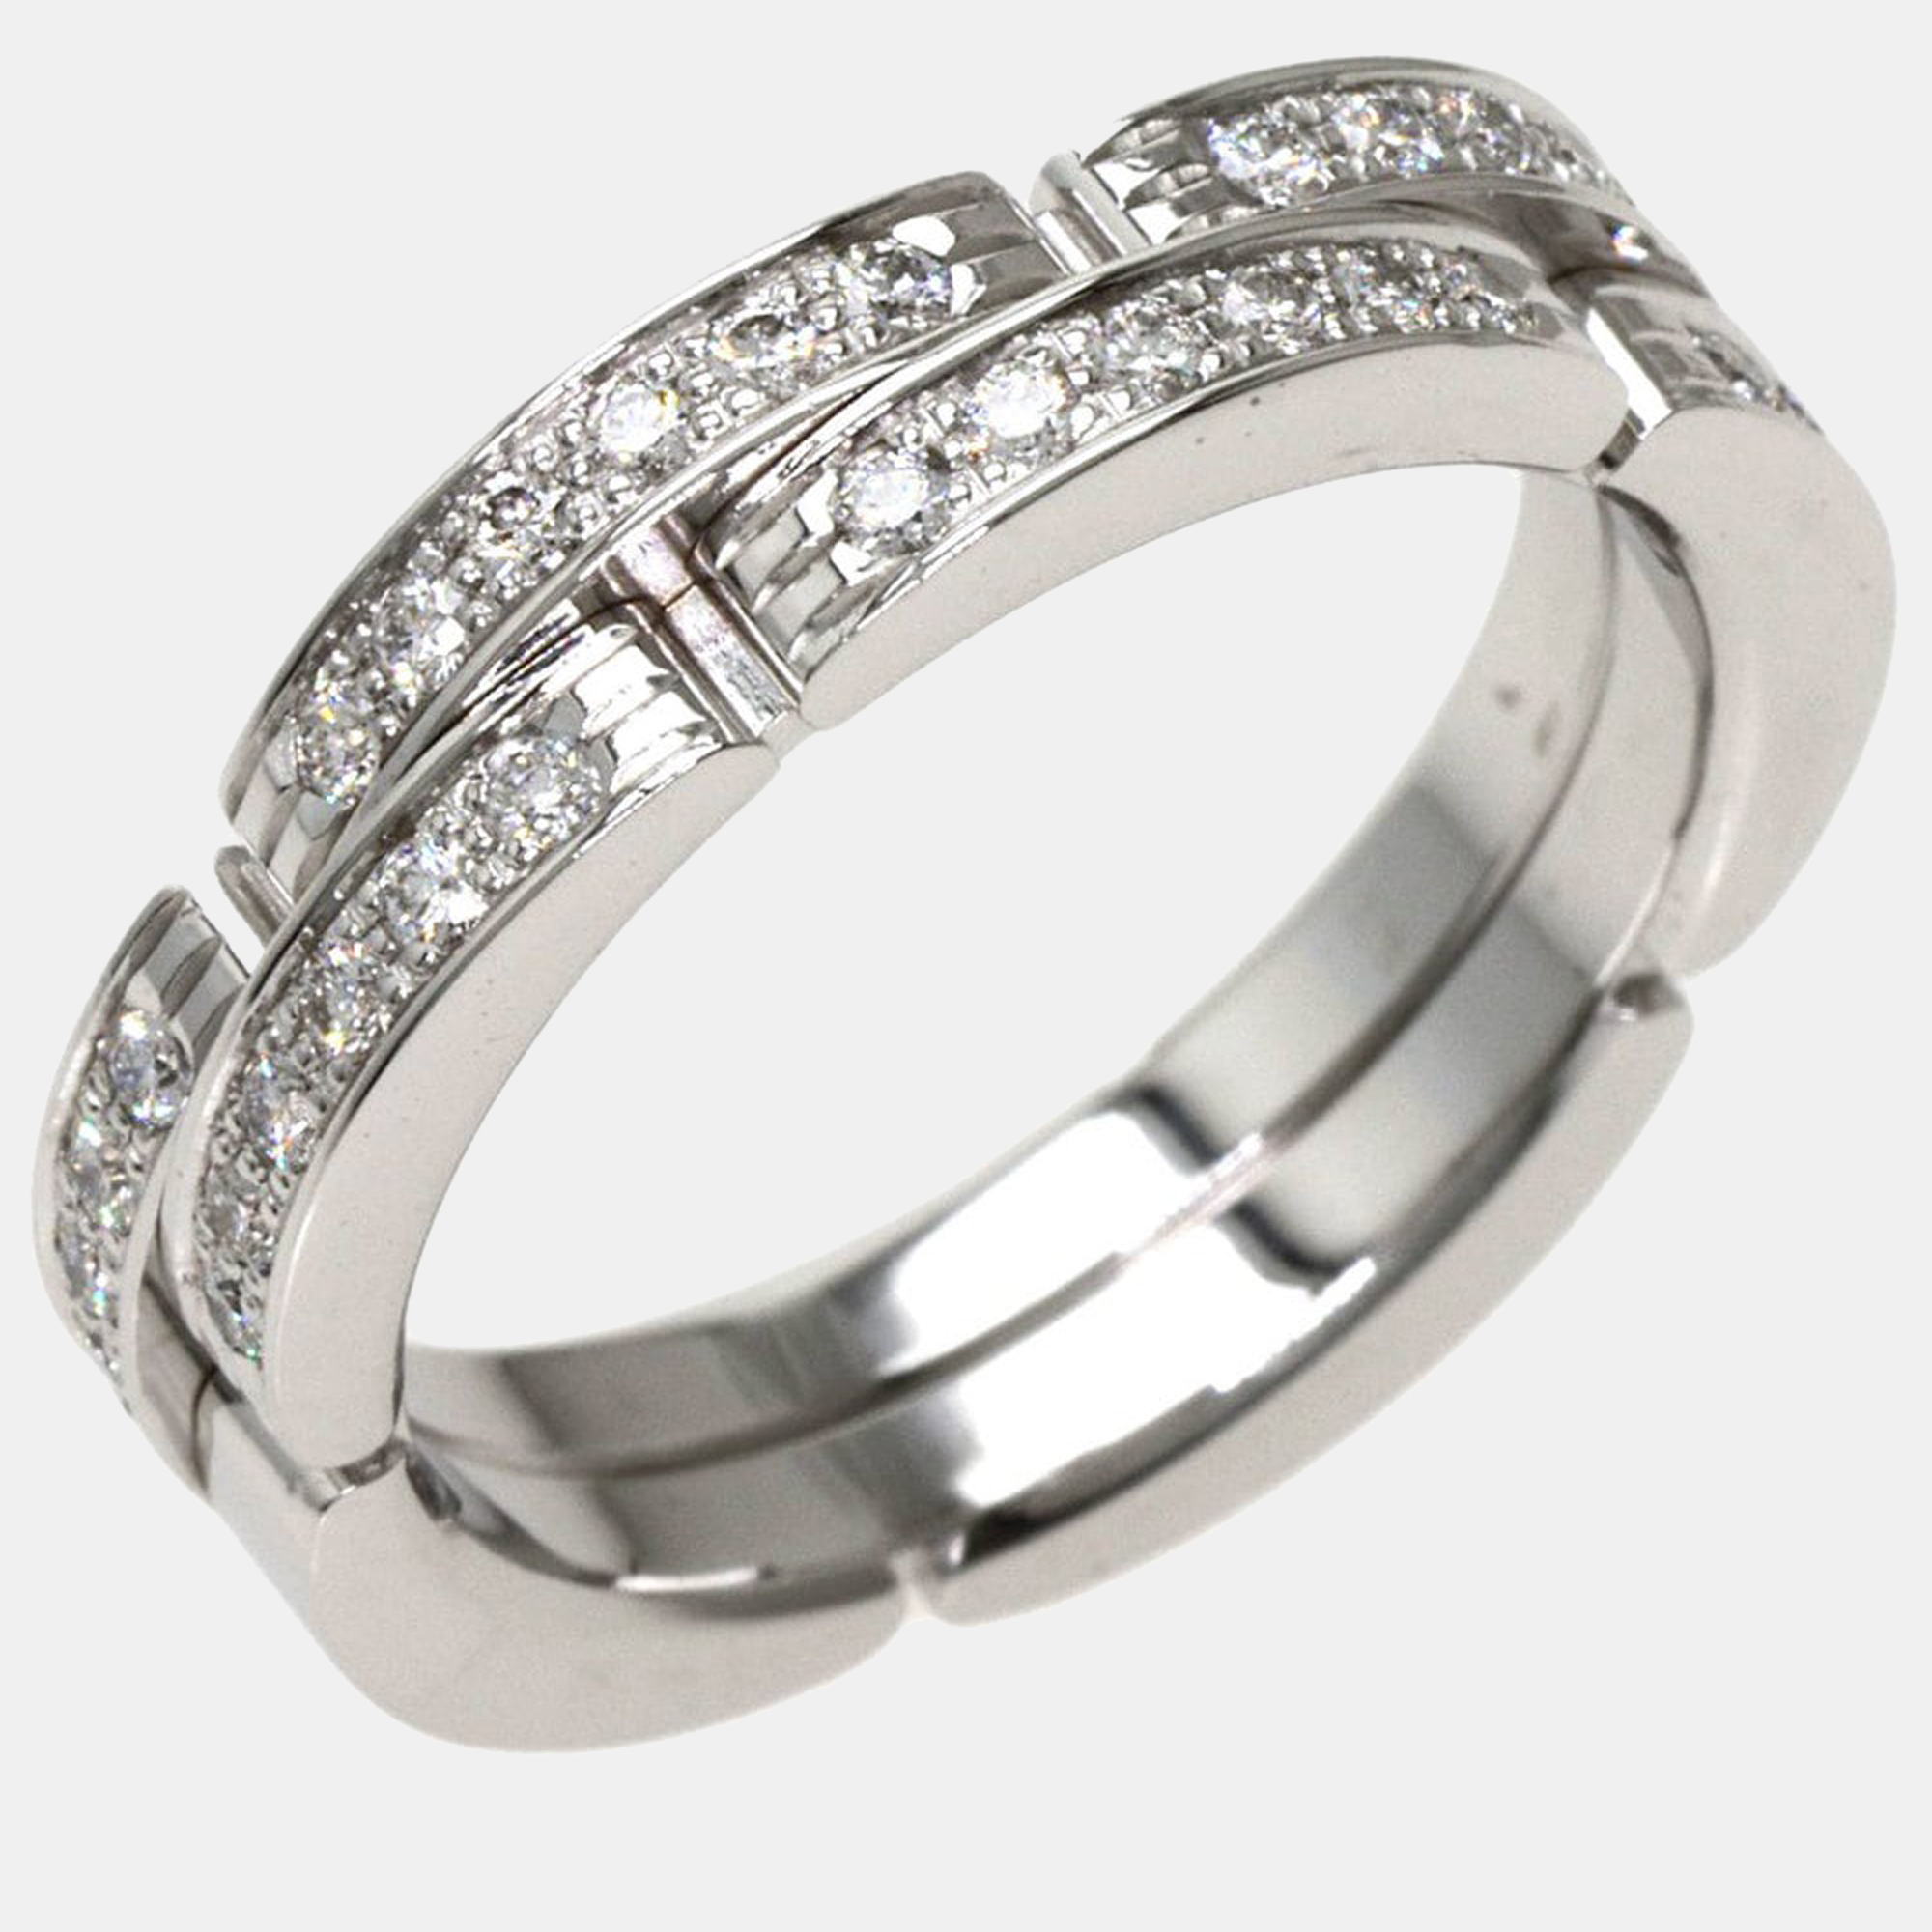 Cartier maillon panthere 18k white gold diamond ring eu 47